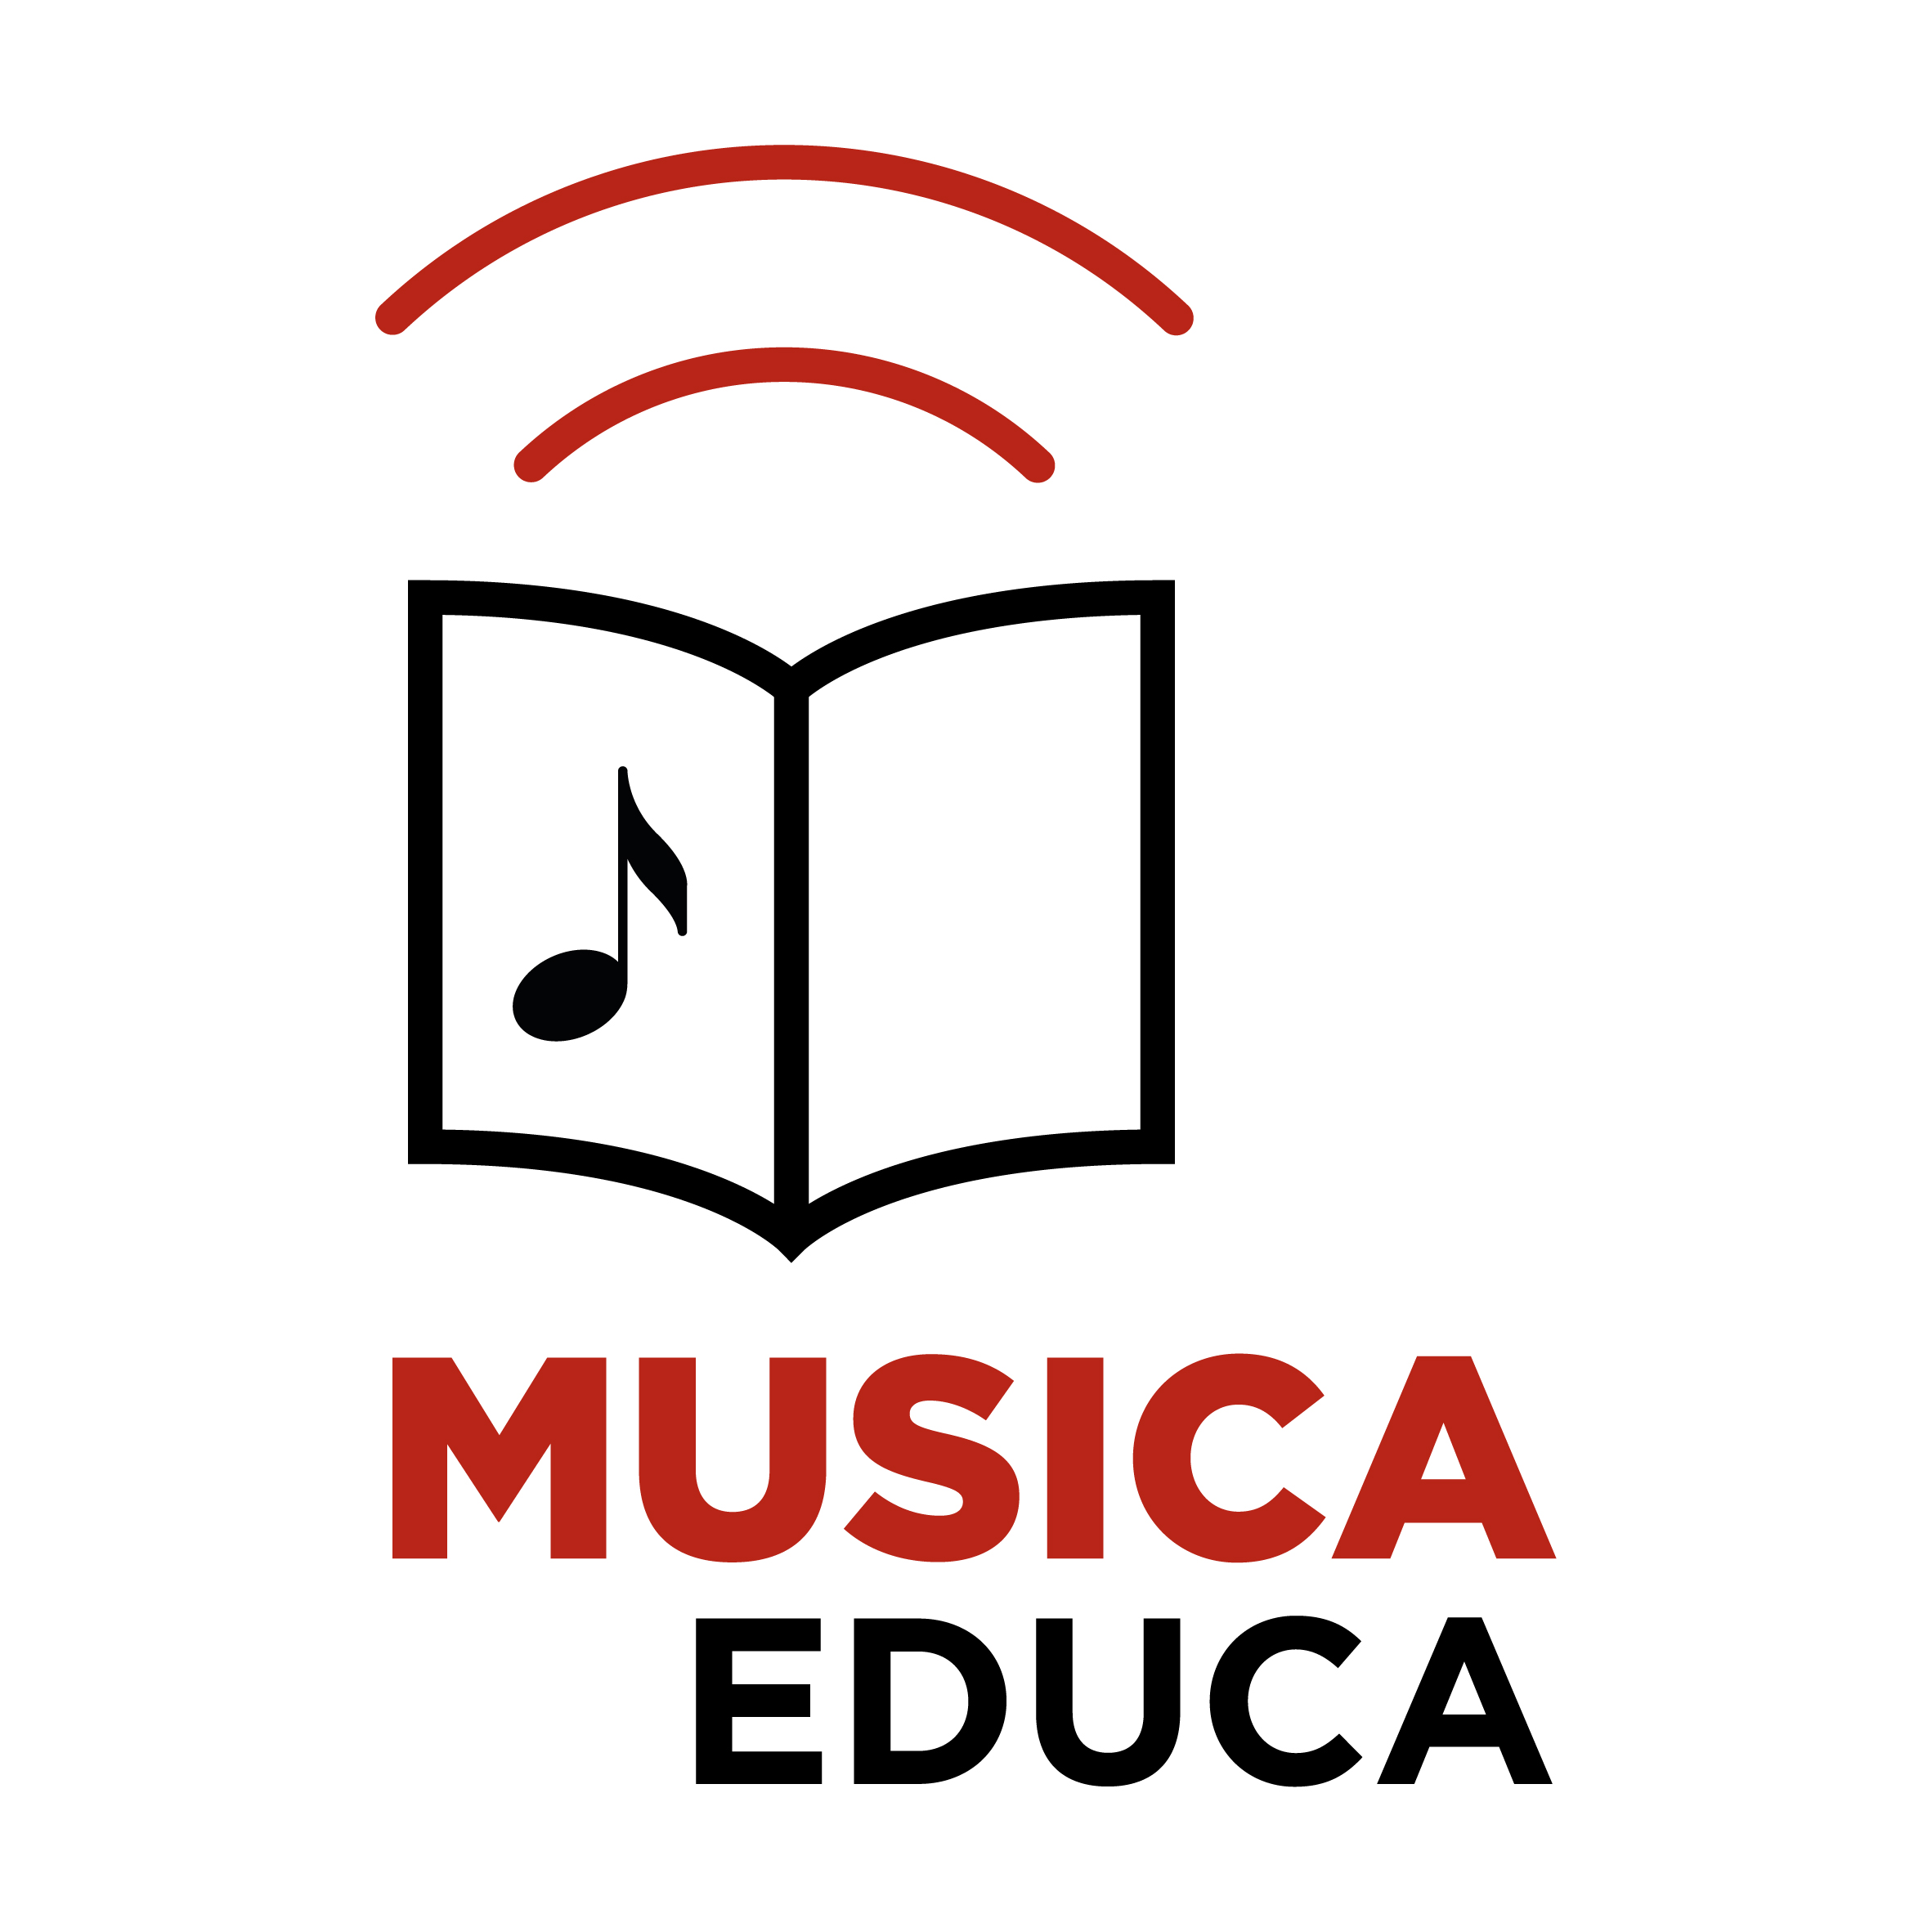 Música Educa